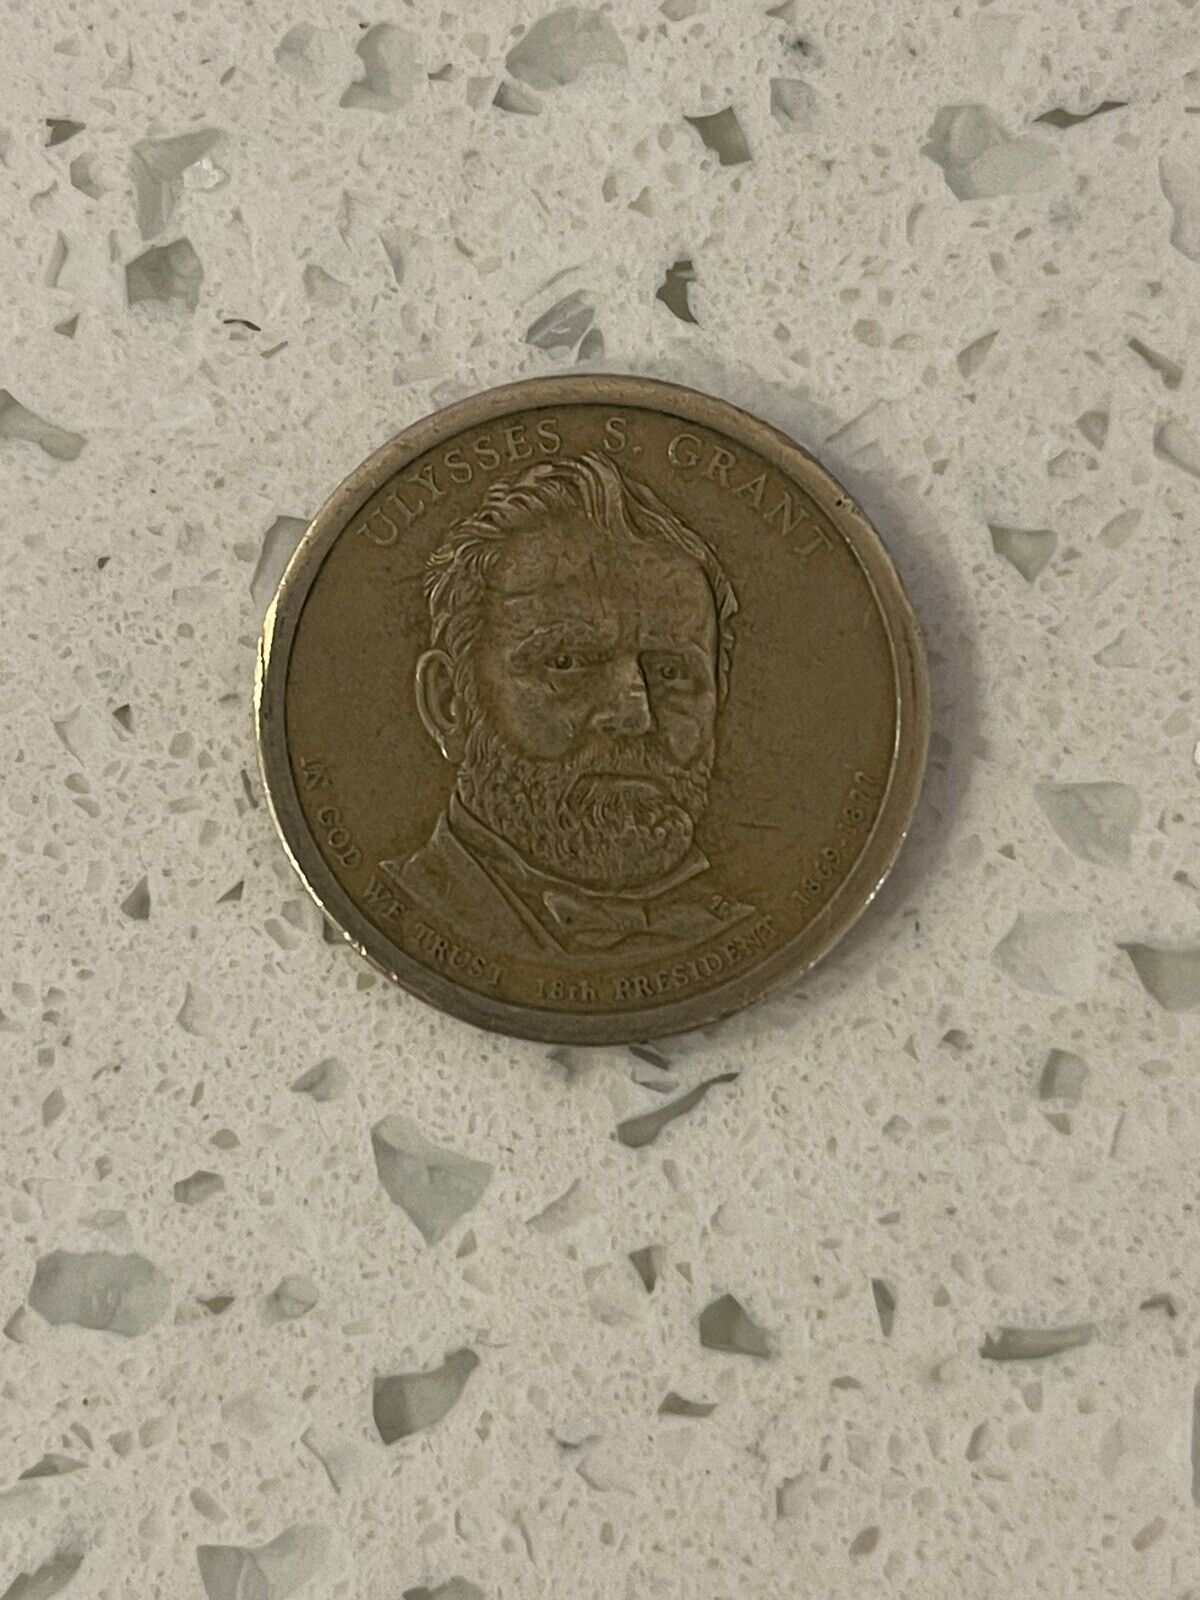 RARE Antique Ulysses S. Grant $1 Dollar Coin 1869-1877 -  18th President